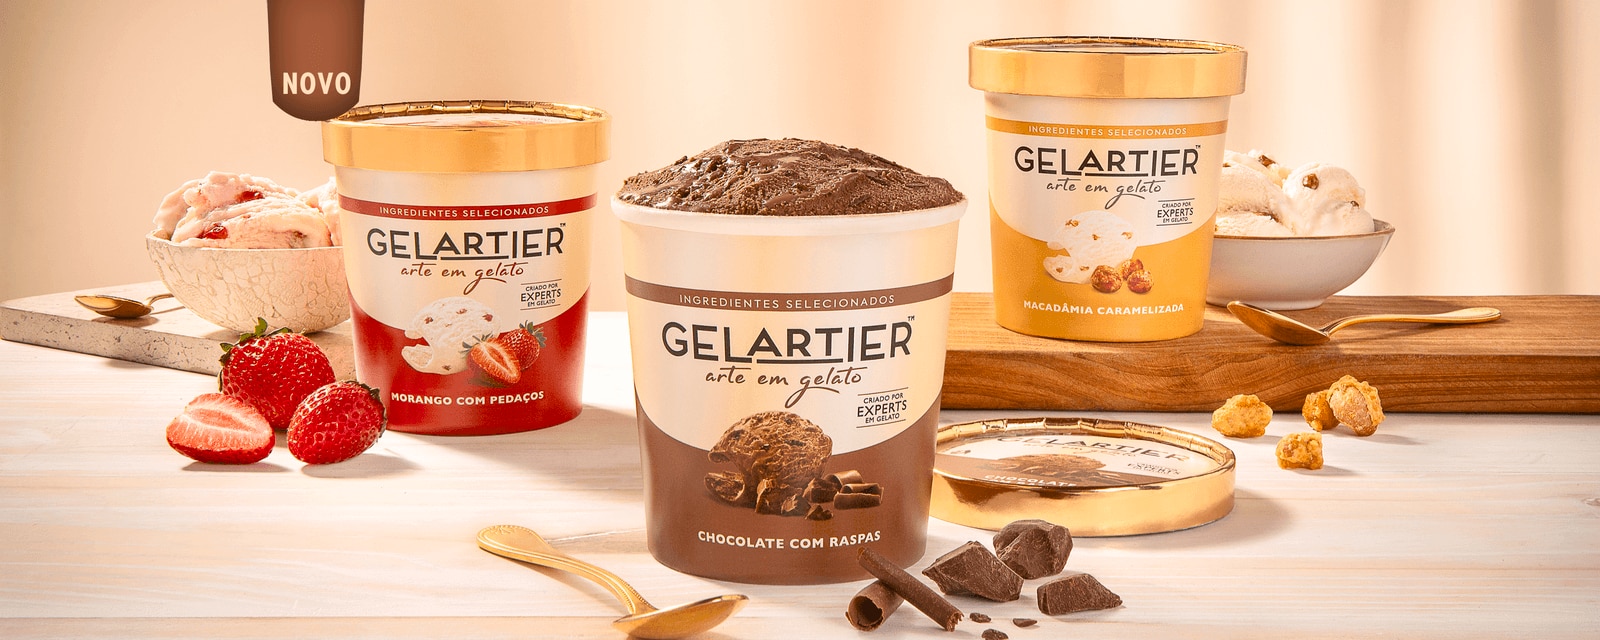 Gelartier ice cream